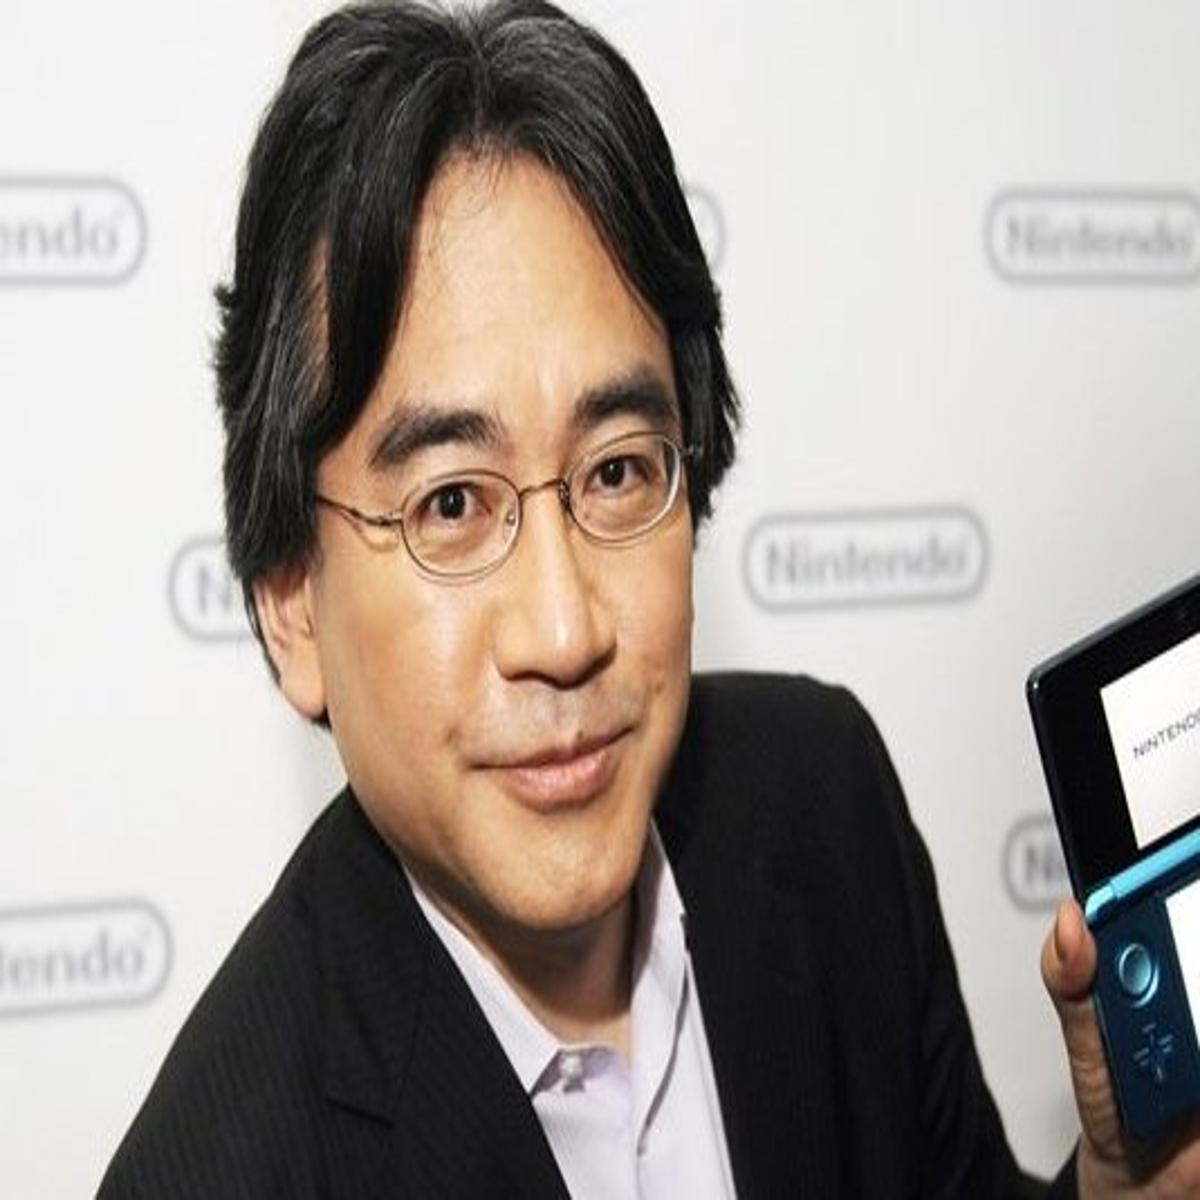 Nintendo President Satoru Iwata dies from cancer at 55